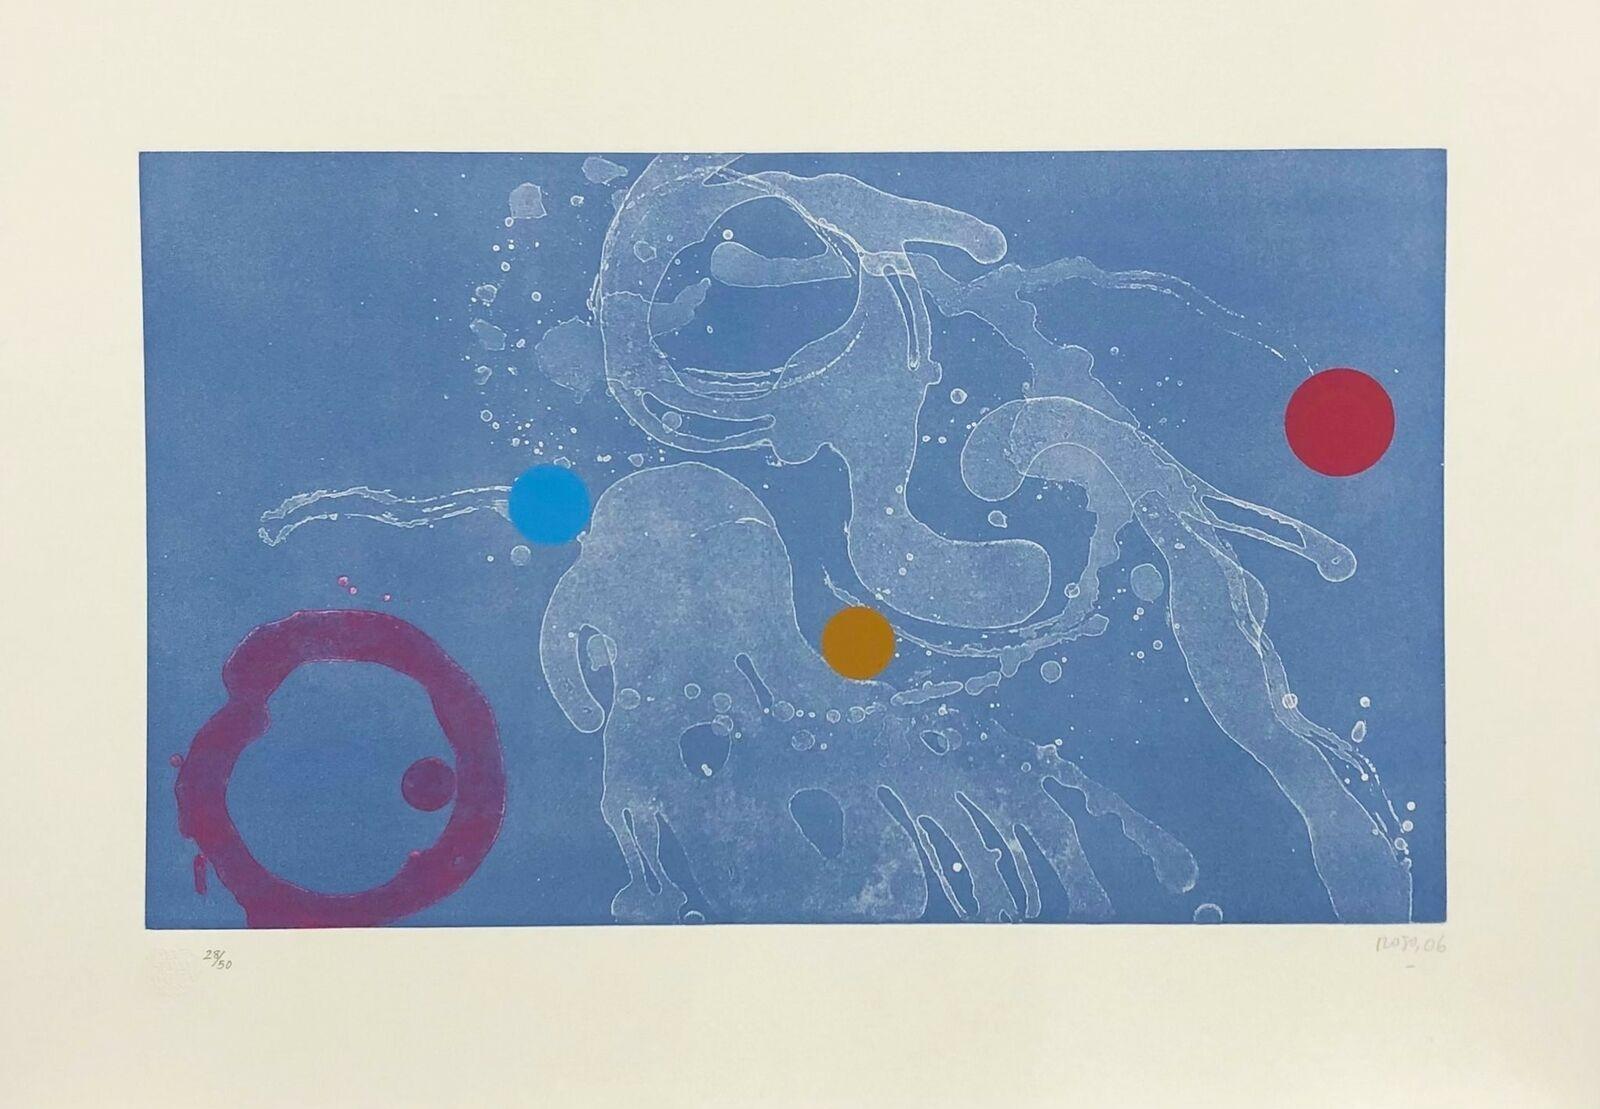 Vicente Rojo (Mexico, 1932-2021)
'Suite Nubes de fuego III', 2006
aquatint, silkscreen on paper Guarro Super Alpha 250g.
18.9 x 26.8 in. (48 x 68 cm.)
Edition of 50
ID: ROJ-120
Unframed
